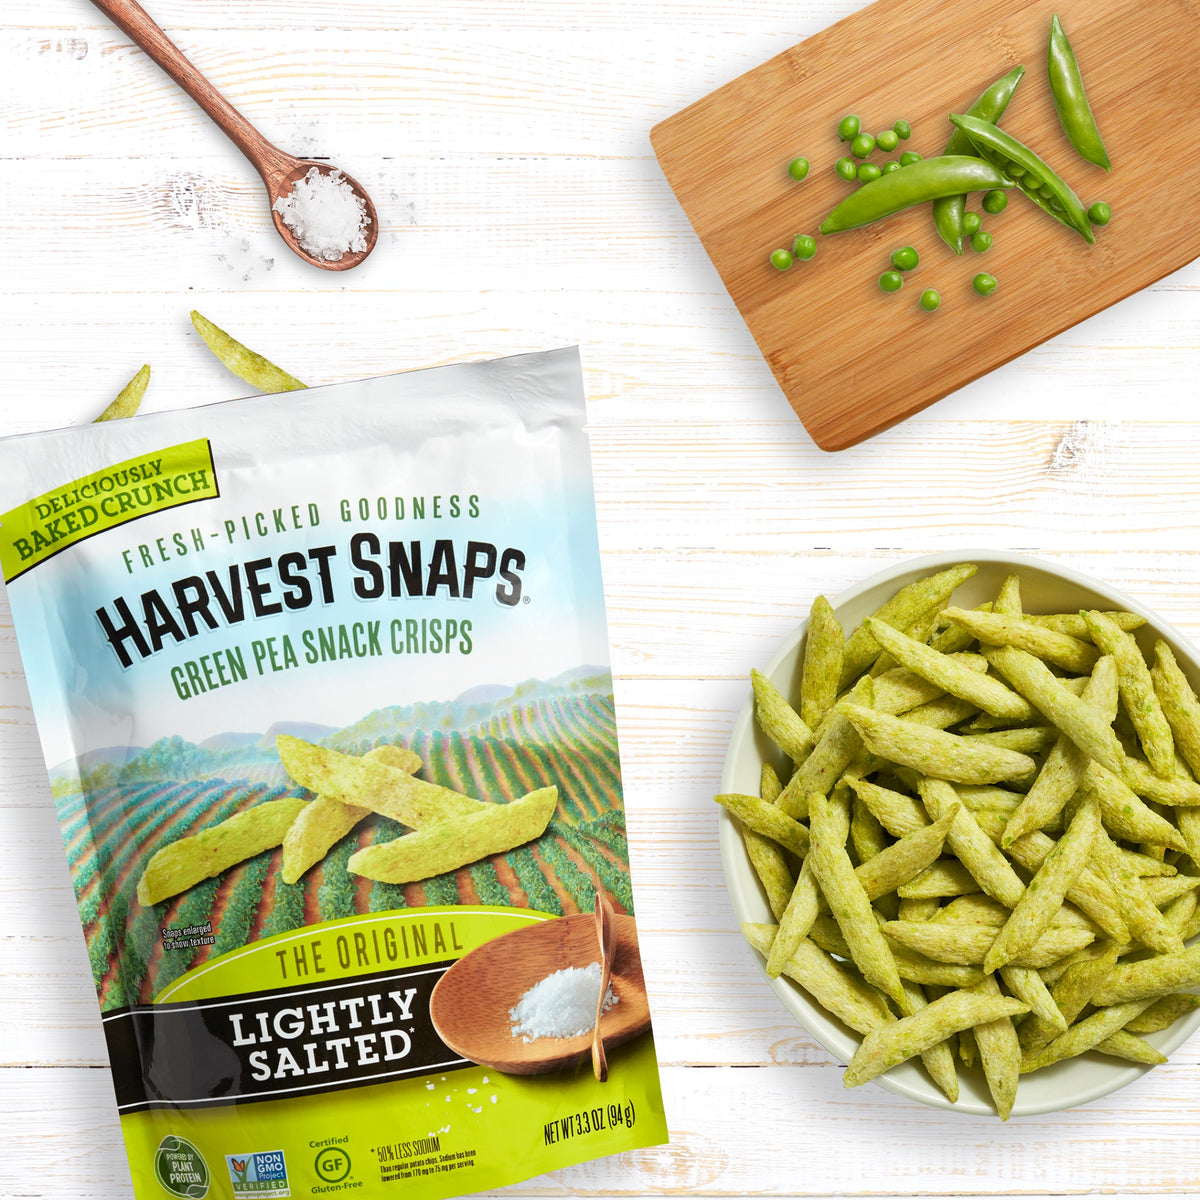 Lightly Salted Original Green Pea Crisps, 3.3 oz at Whole Foods Market